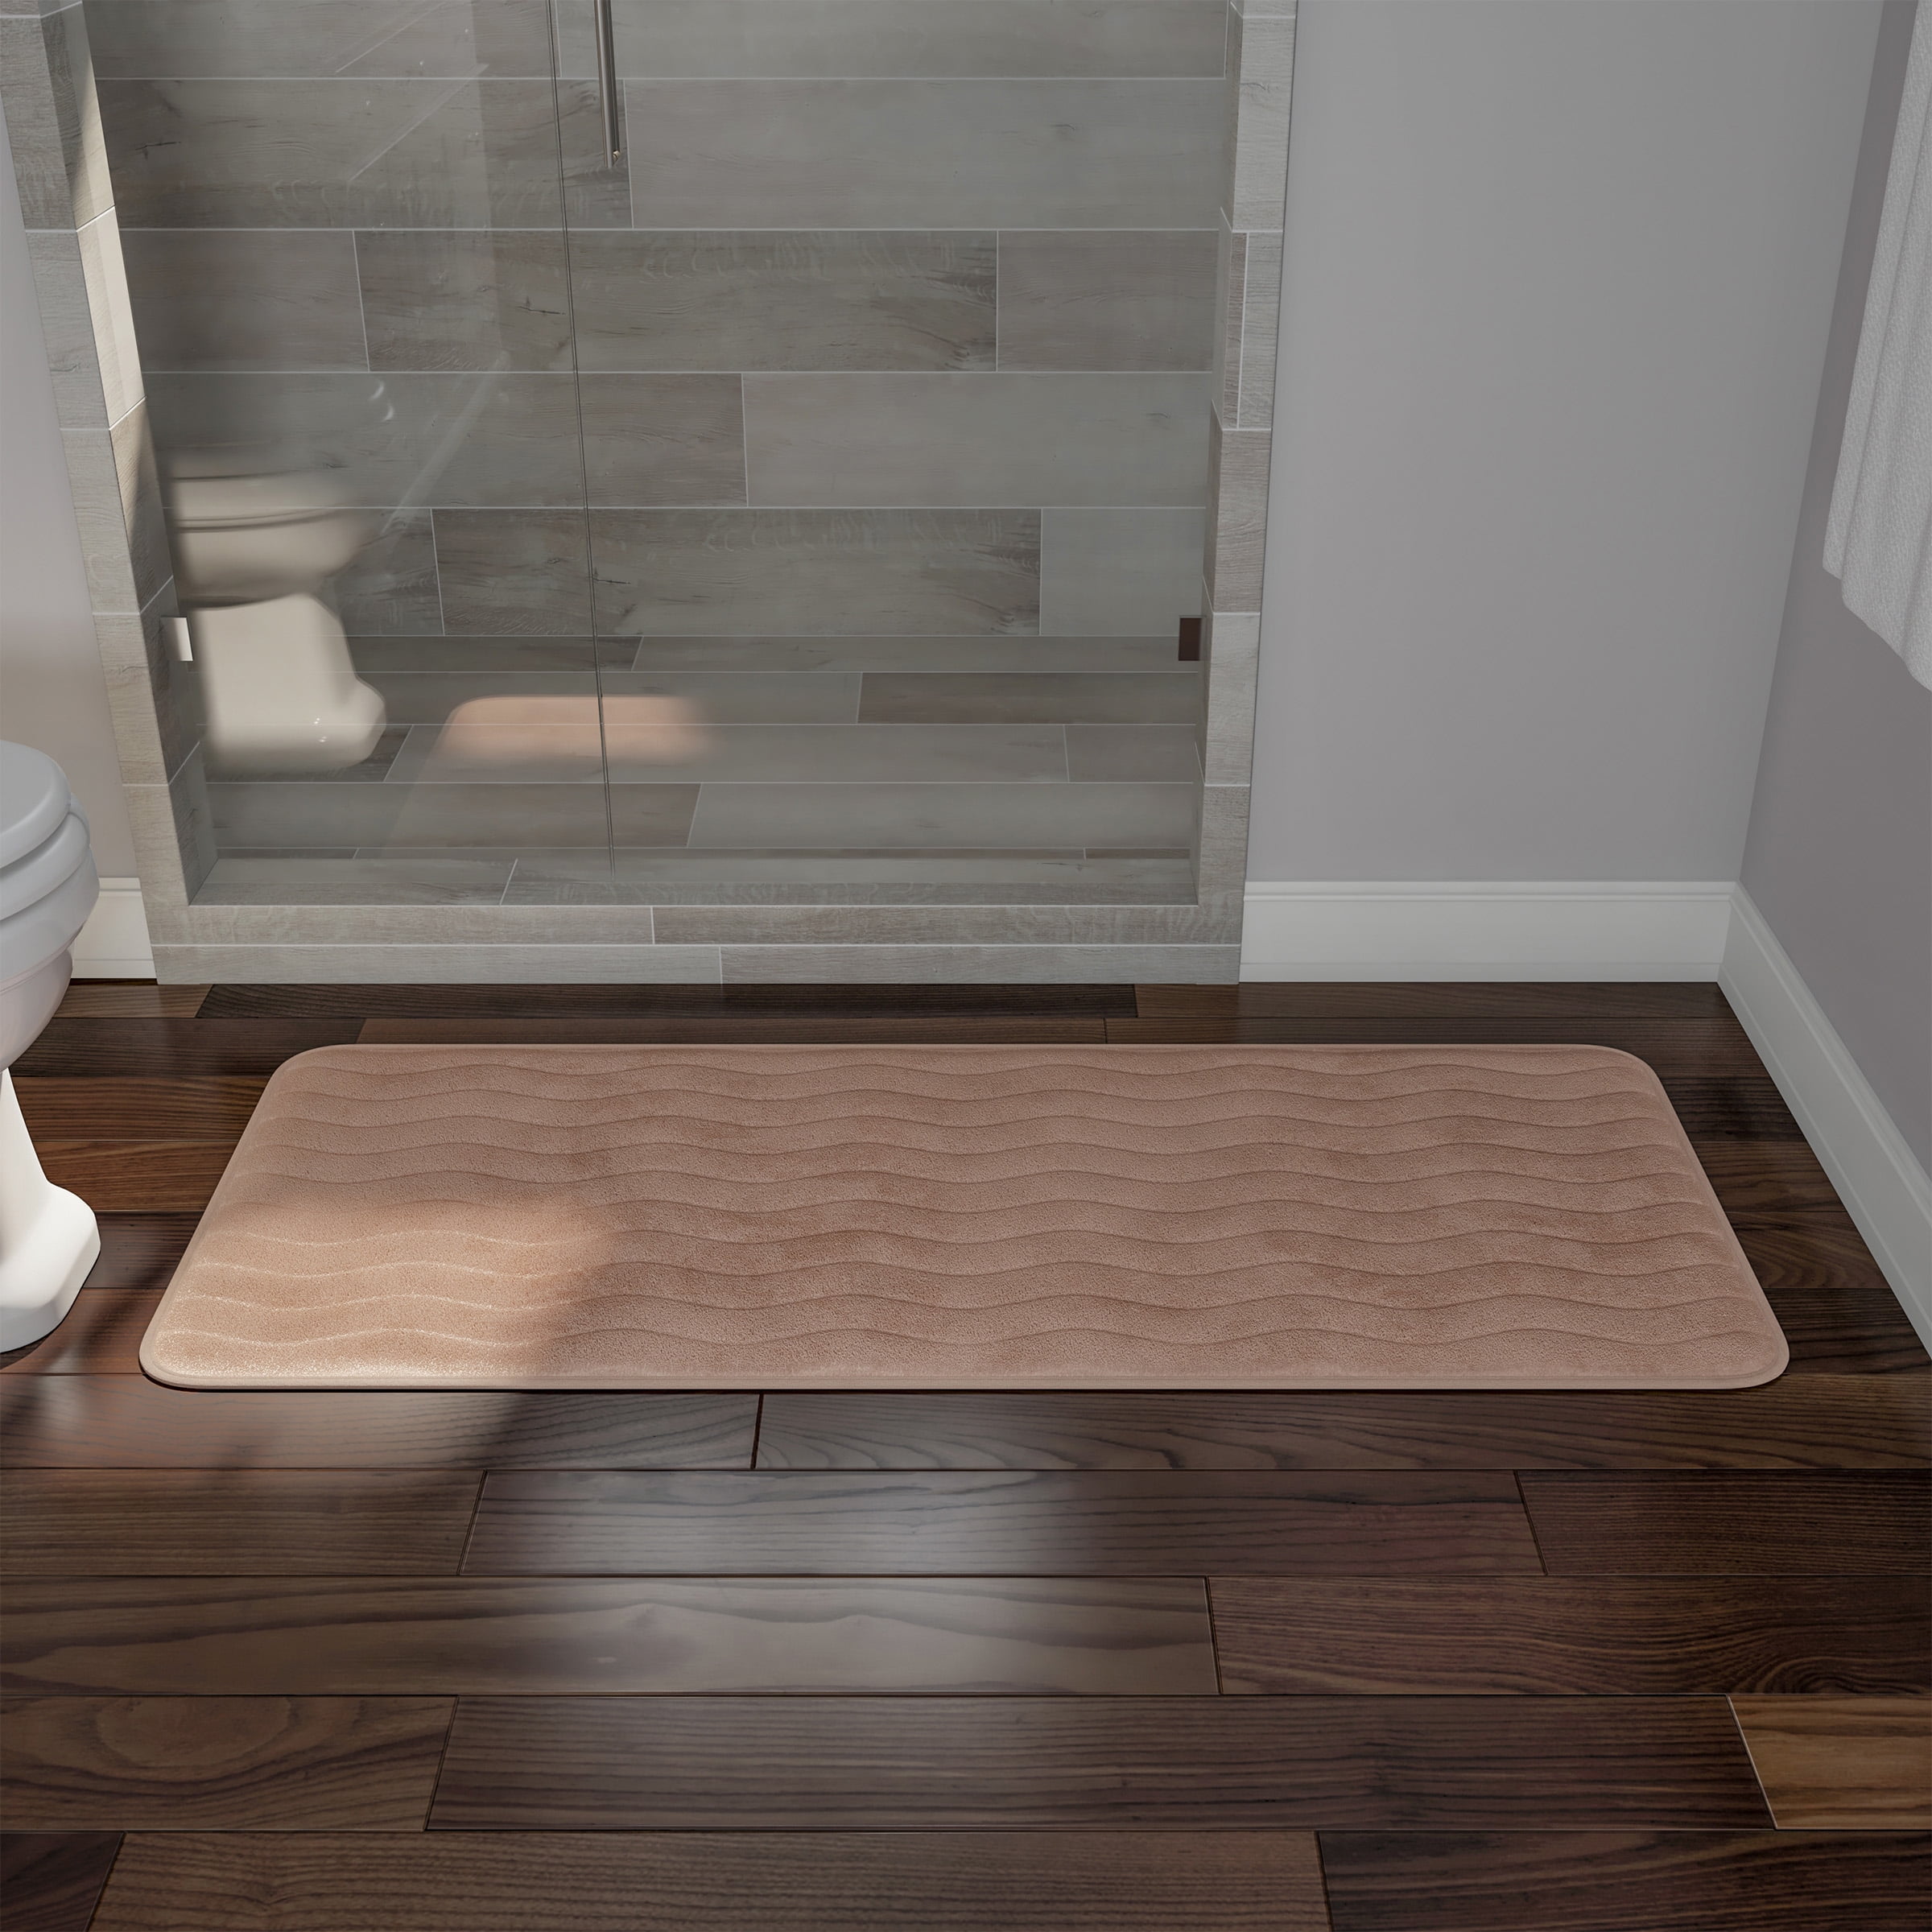 Woven Bath Mat, Non-slip Absorbent Bathroom Mat, Laundry Floor Rug